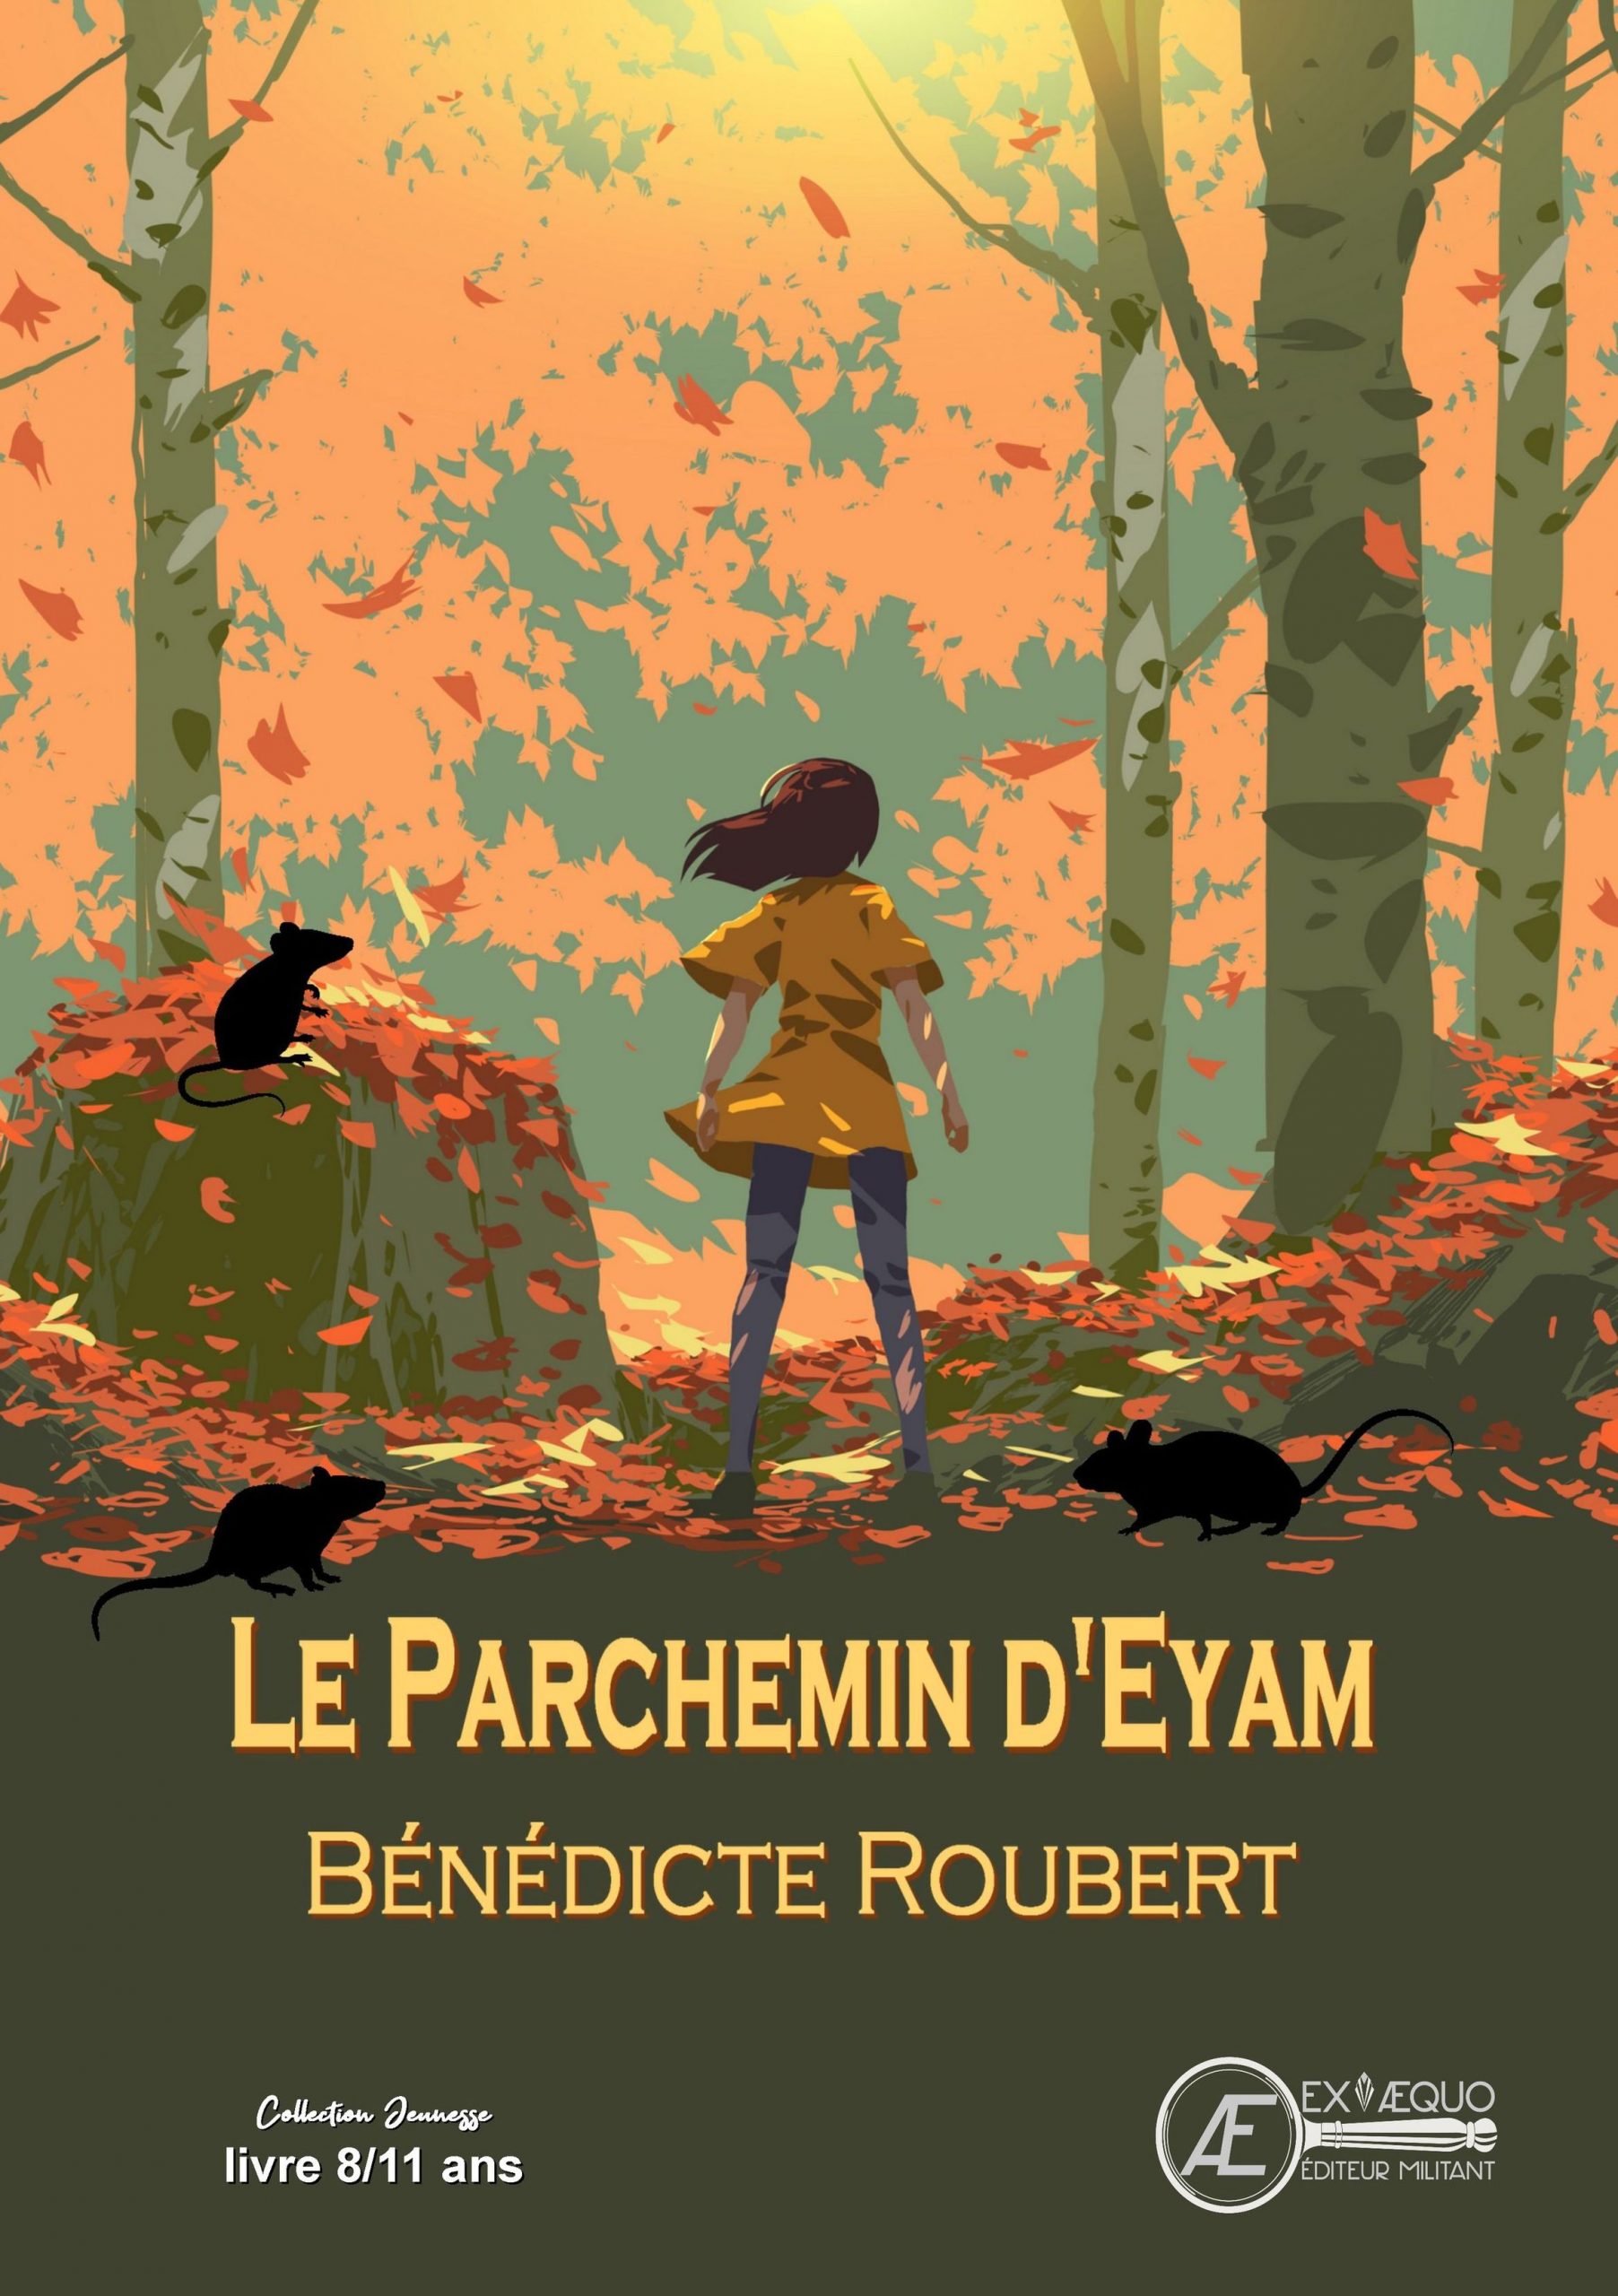 You are currently viewing Le parchemin d’Eyam, de Benedicte Roubert